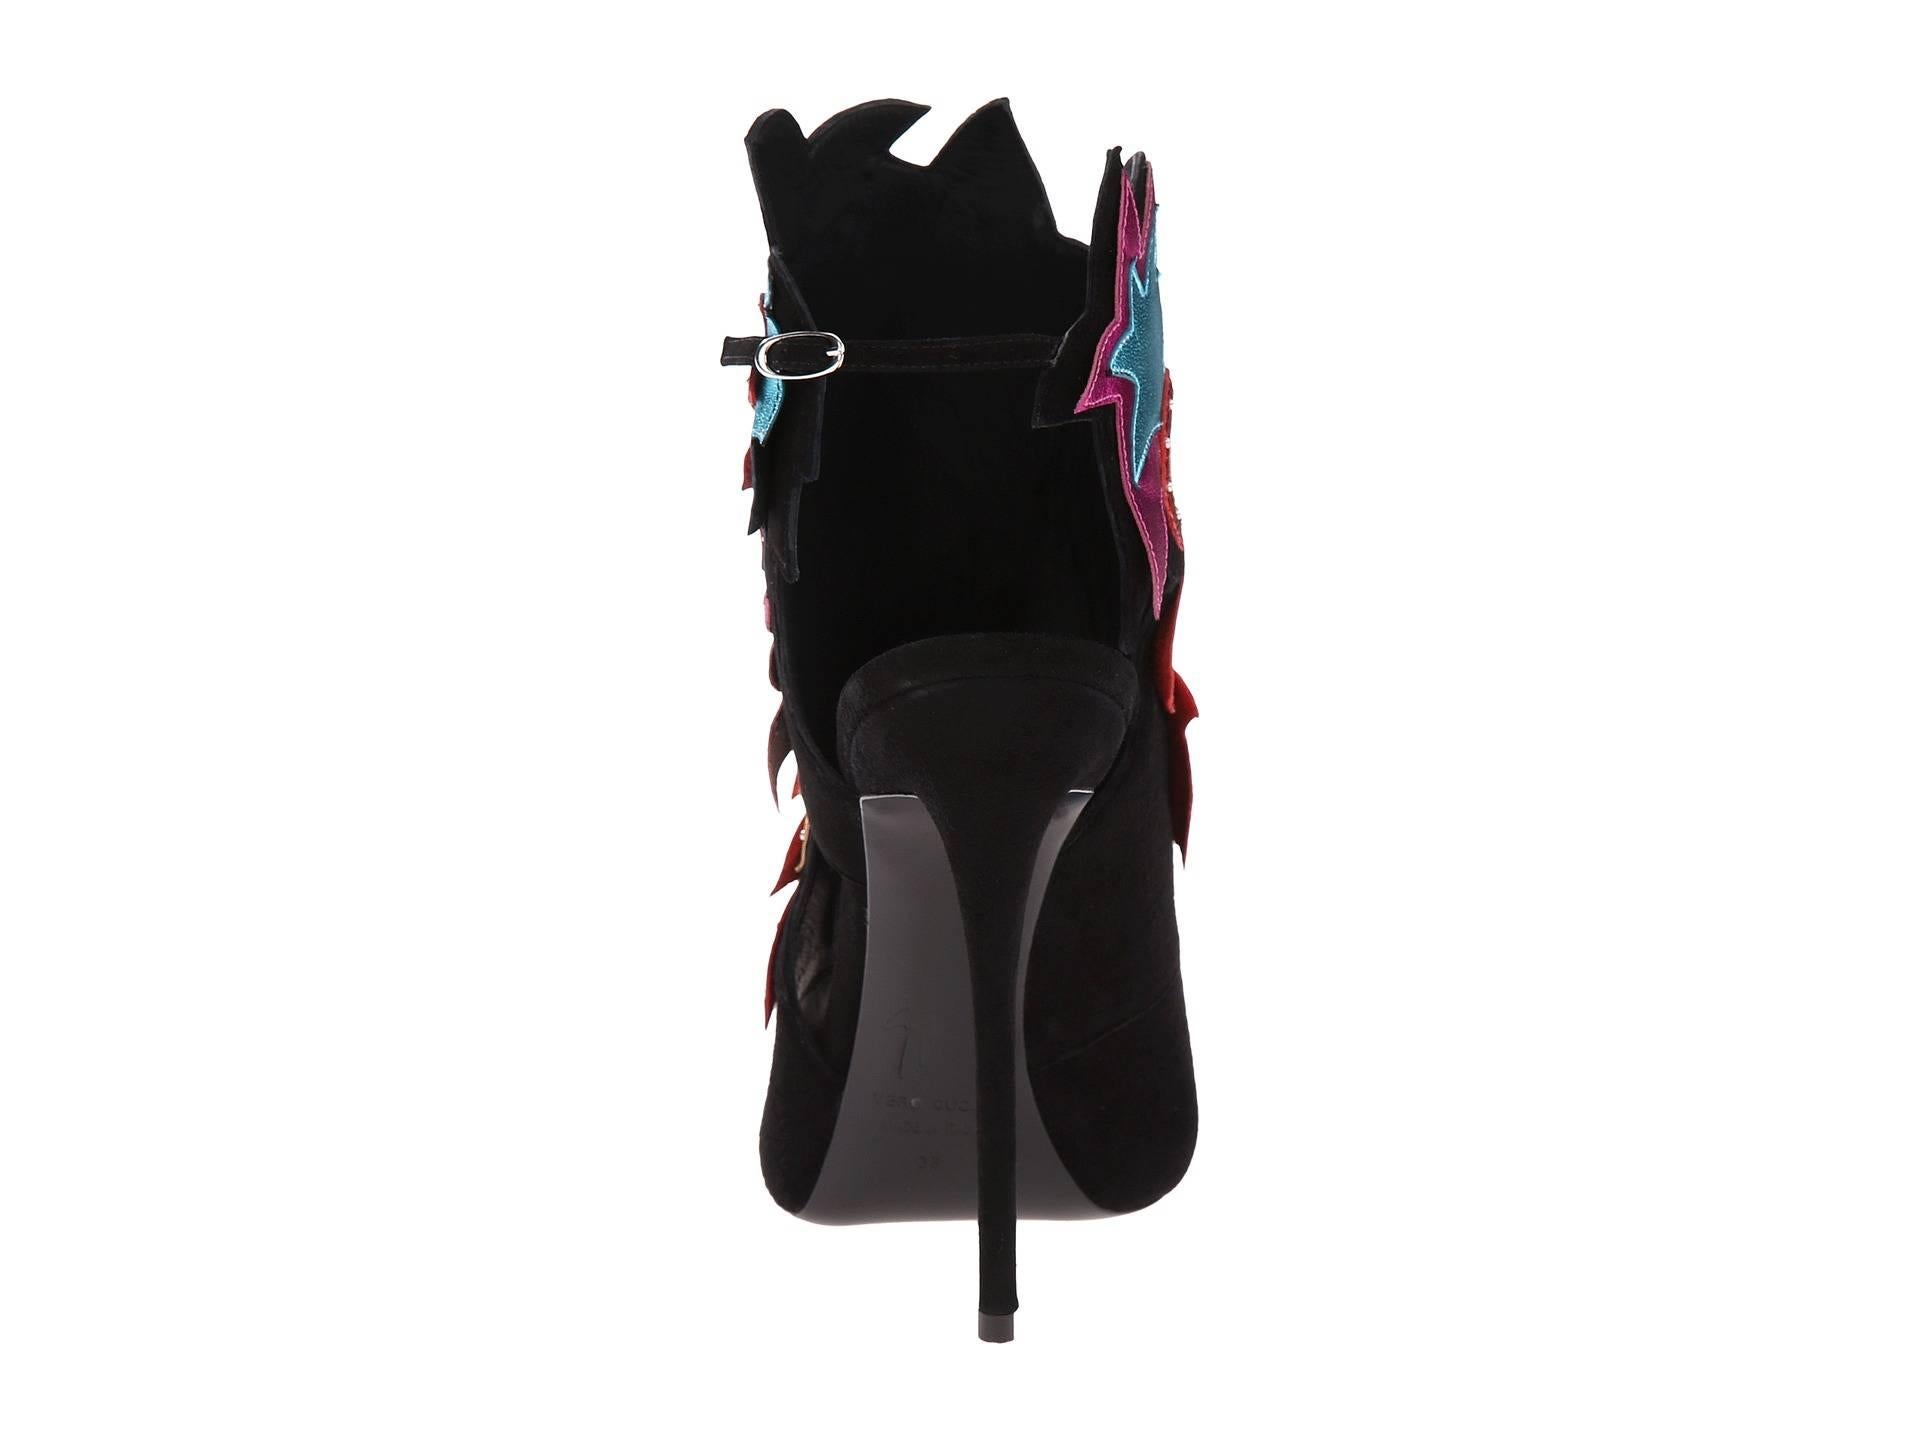 Women's Giuseppe Zanotti NEW Black Suede Leather Multi Color Flower Stud Heels in Box